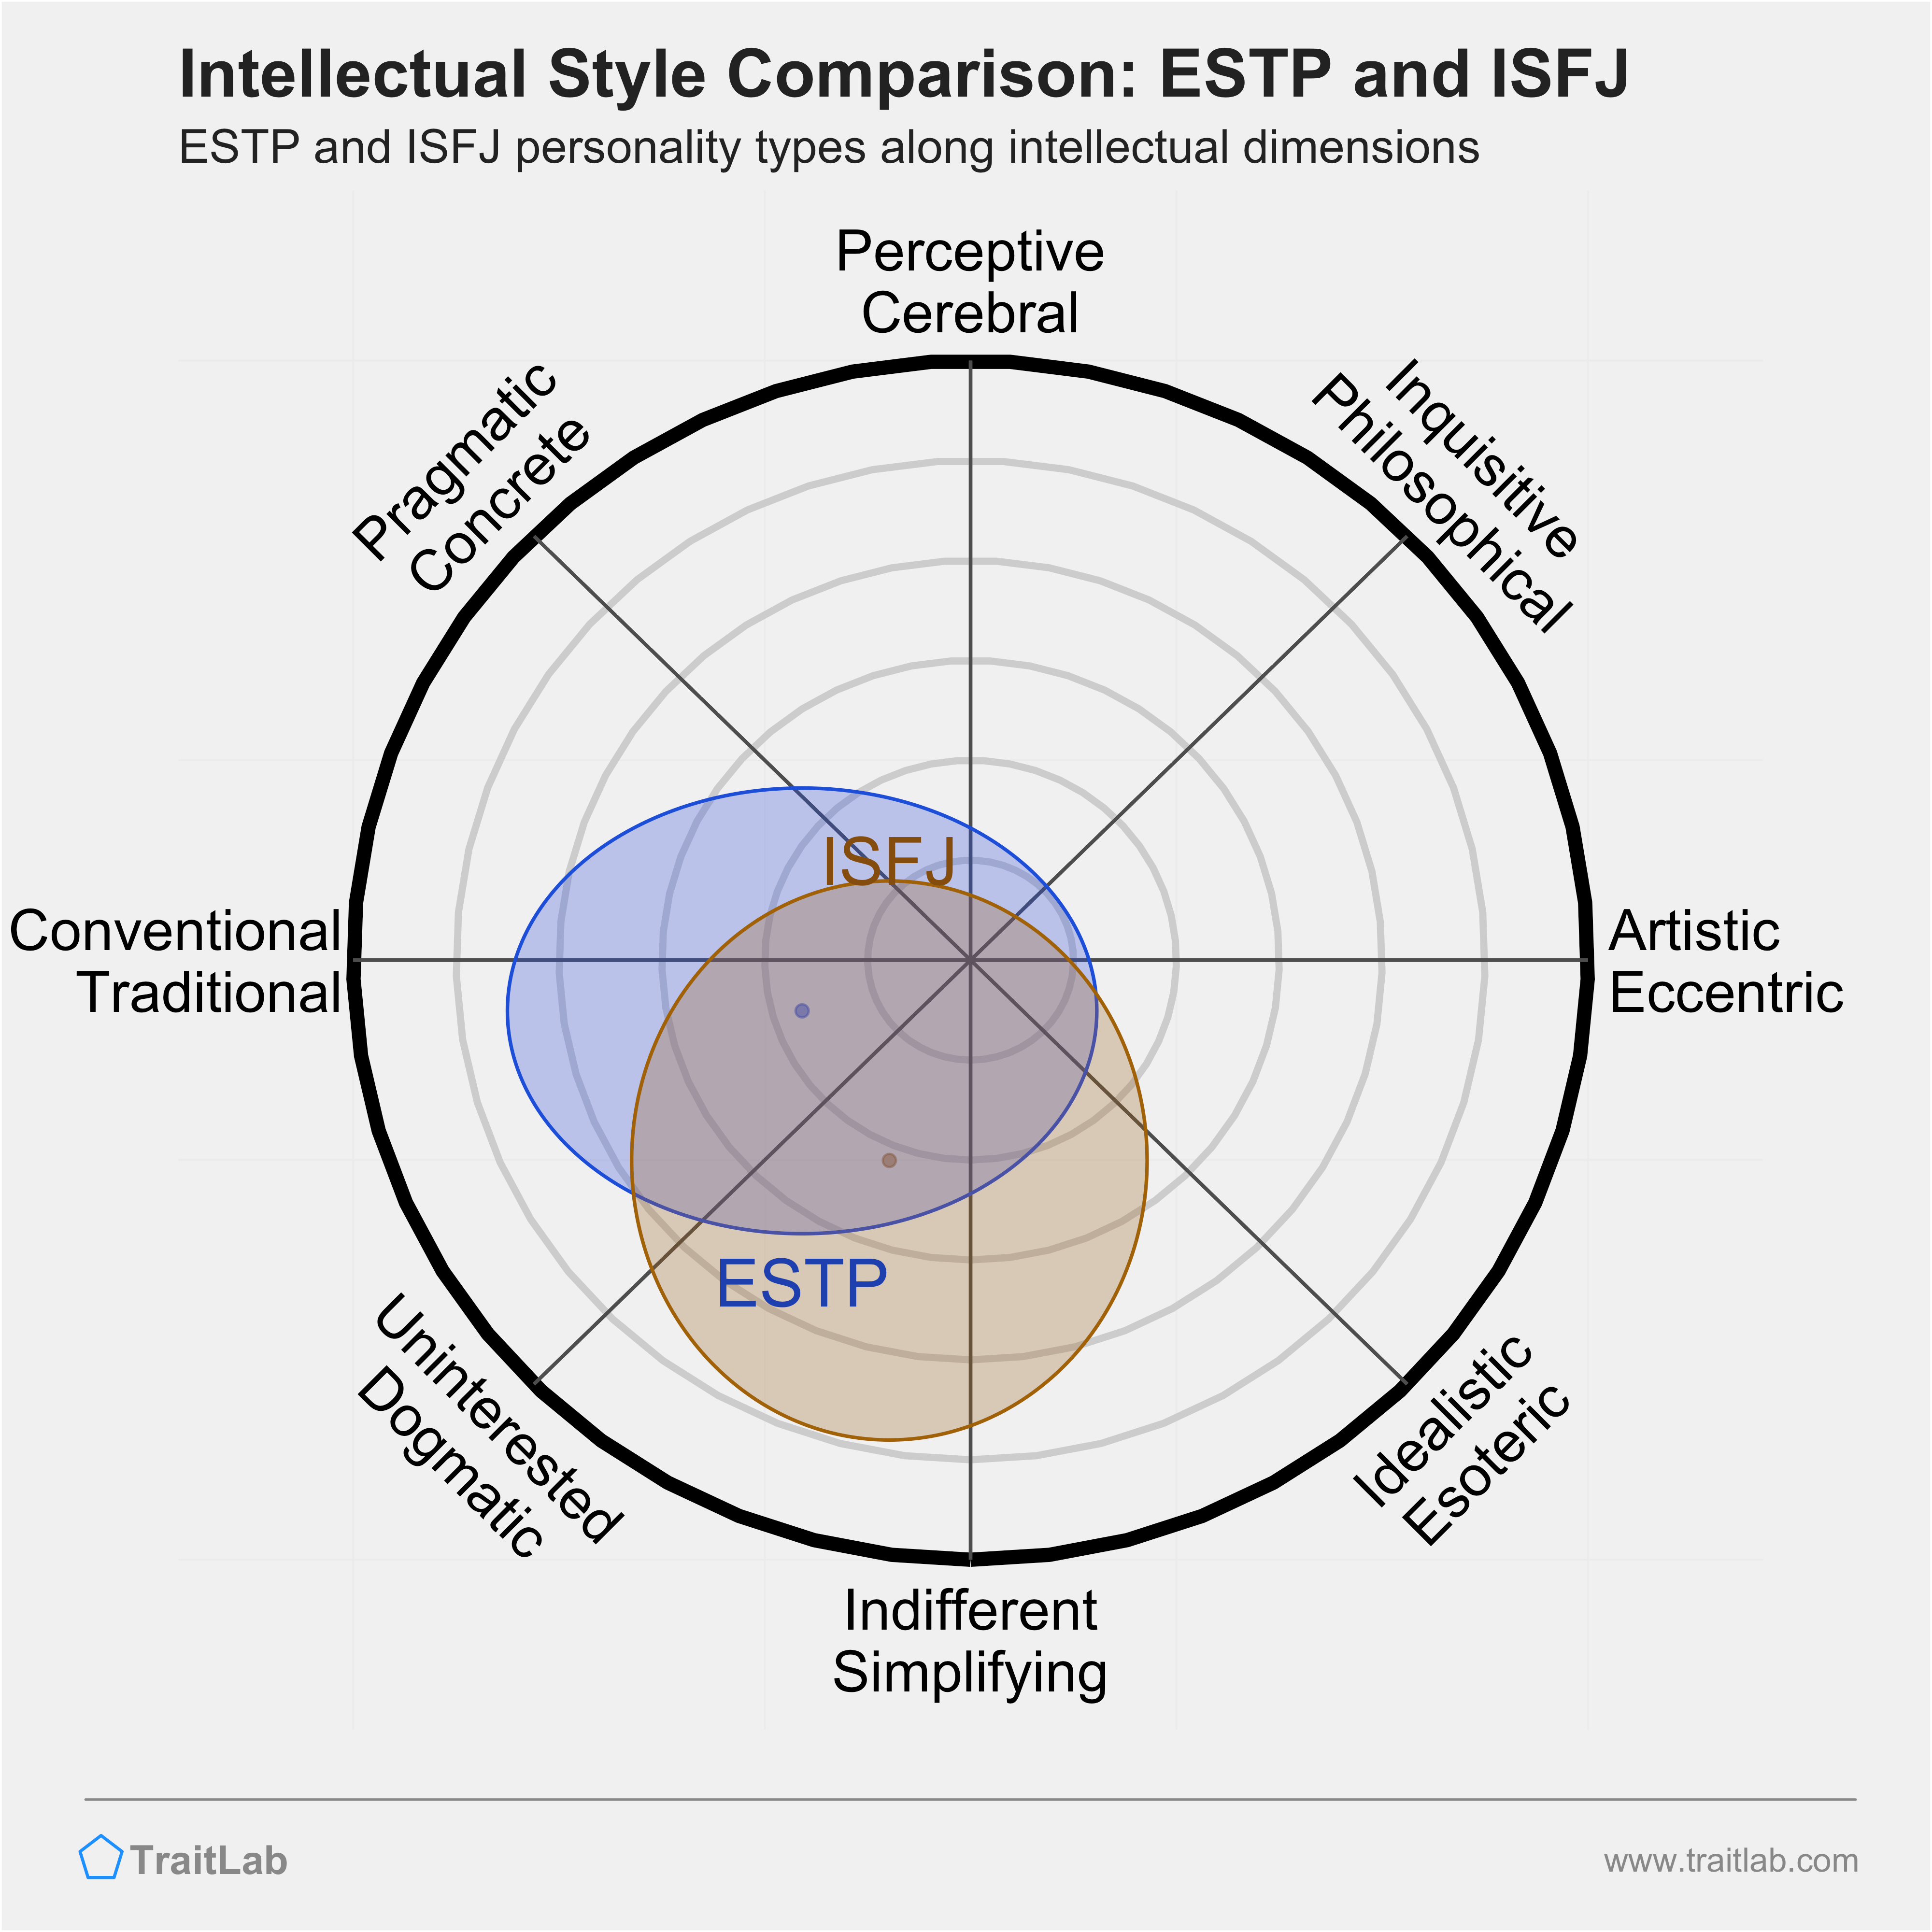 ESTP and ISFJ comparison across intellectual dimensions